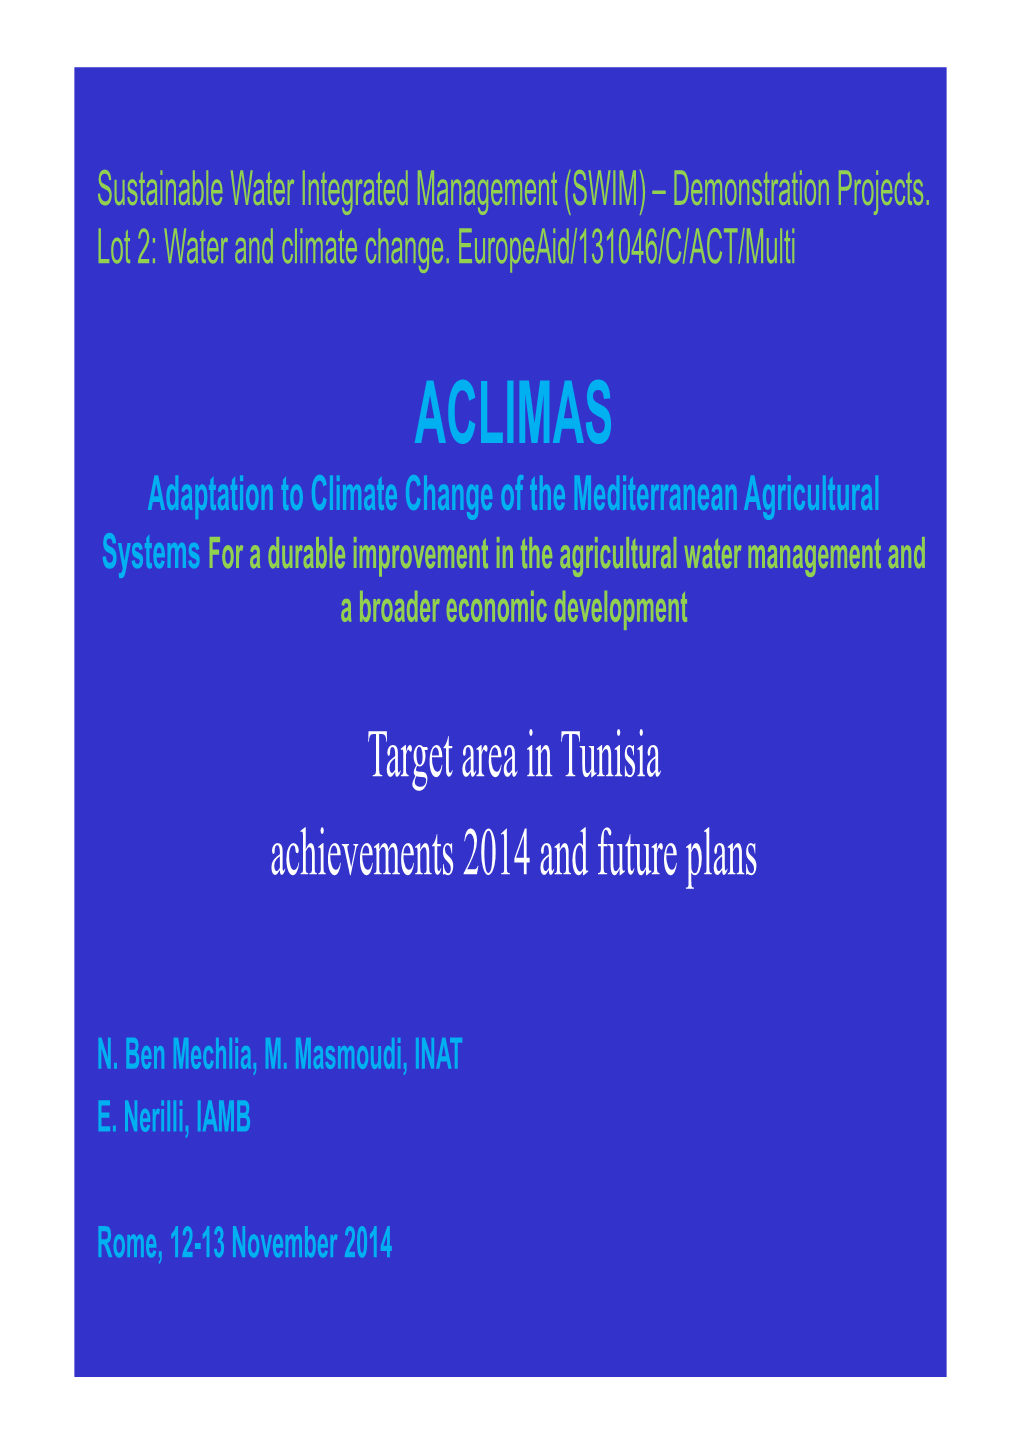 Aclimas-Tunisia- Rome 13-14 November 2014